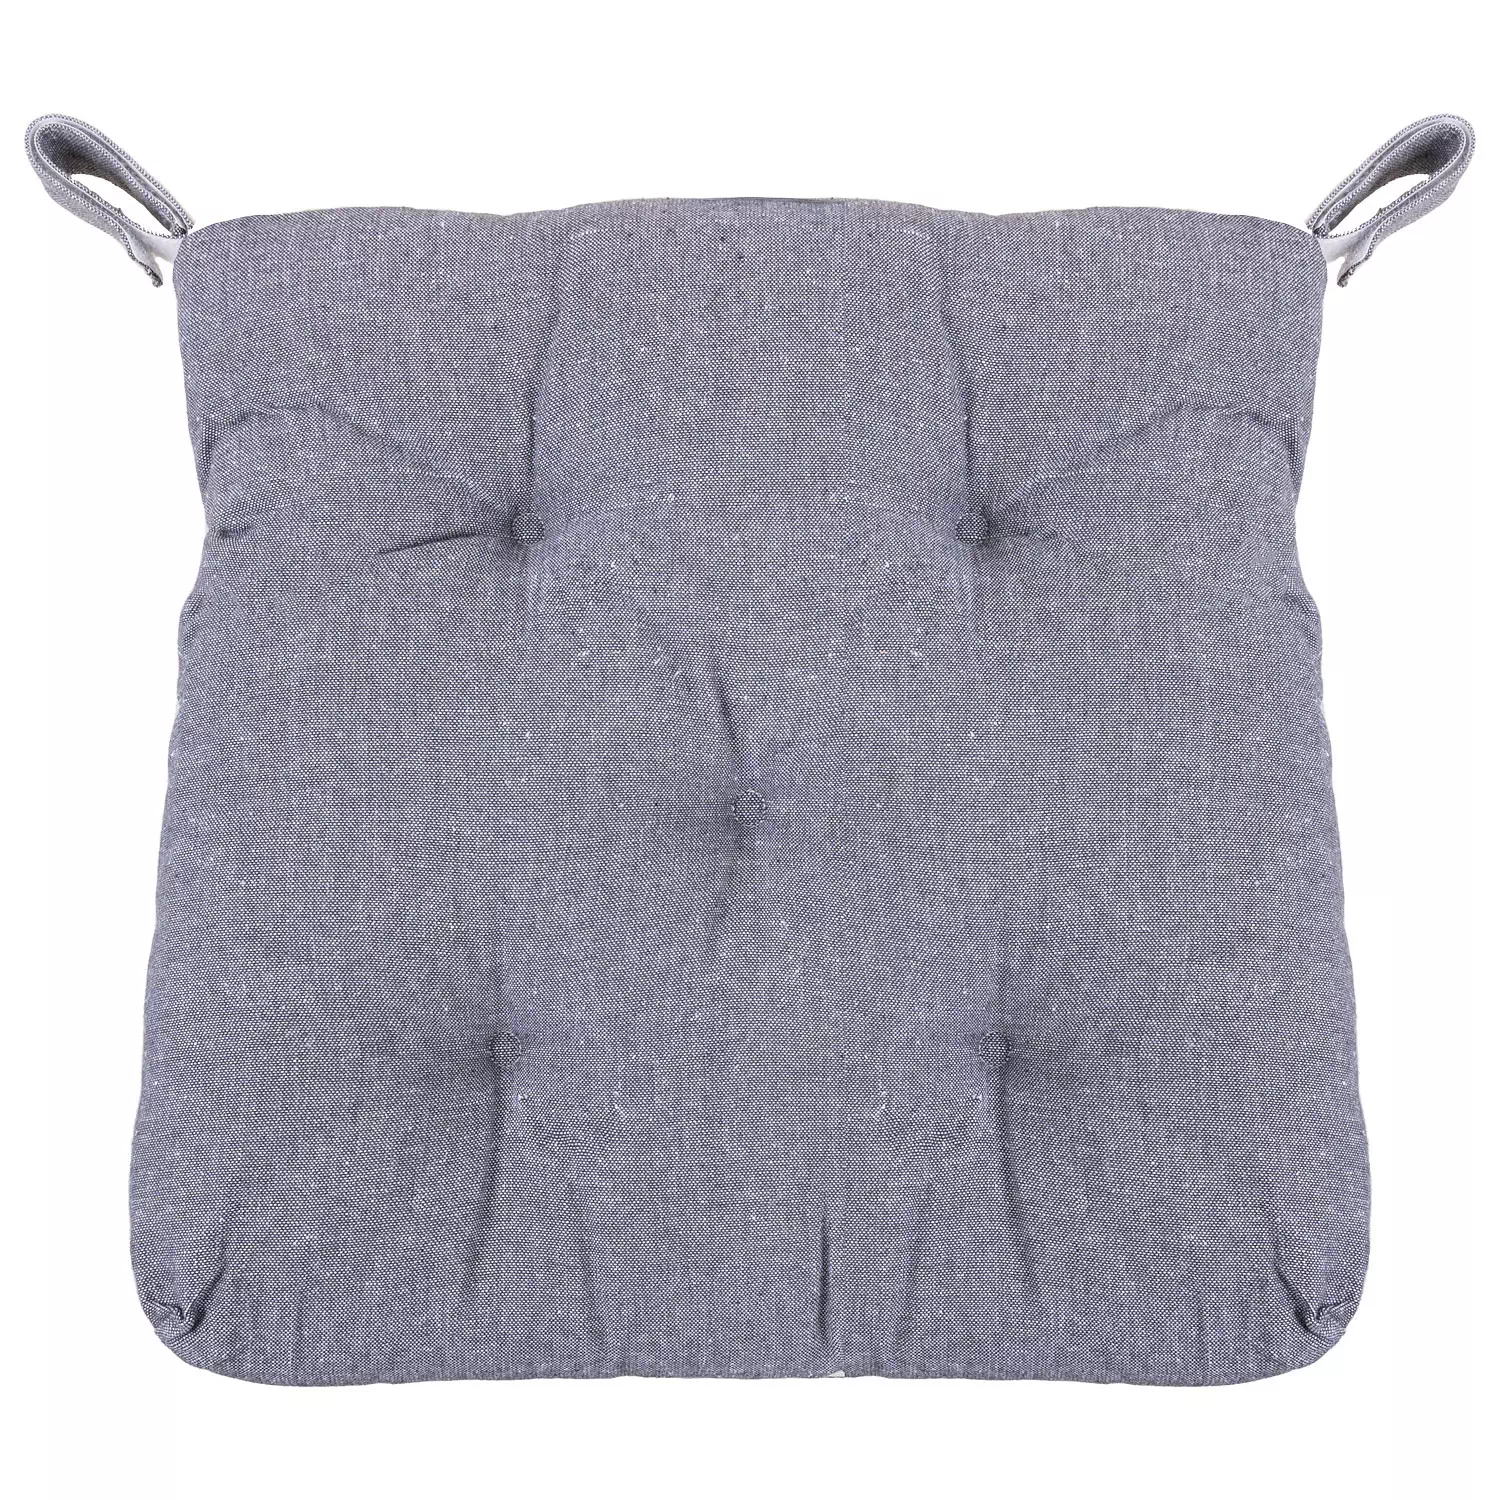 Malia - Chair pad, 16"x15"